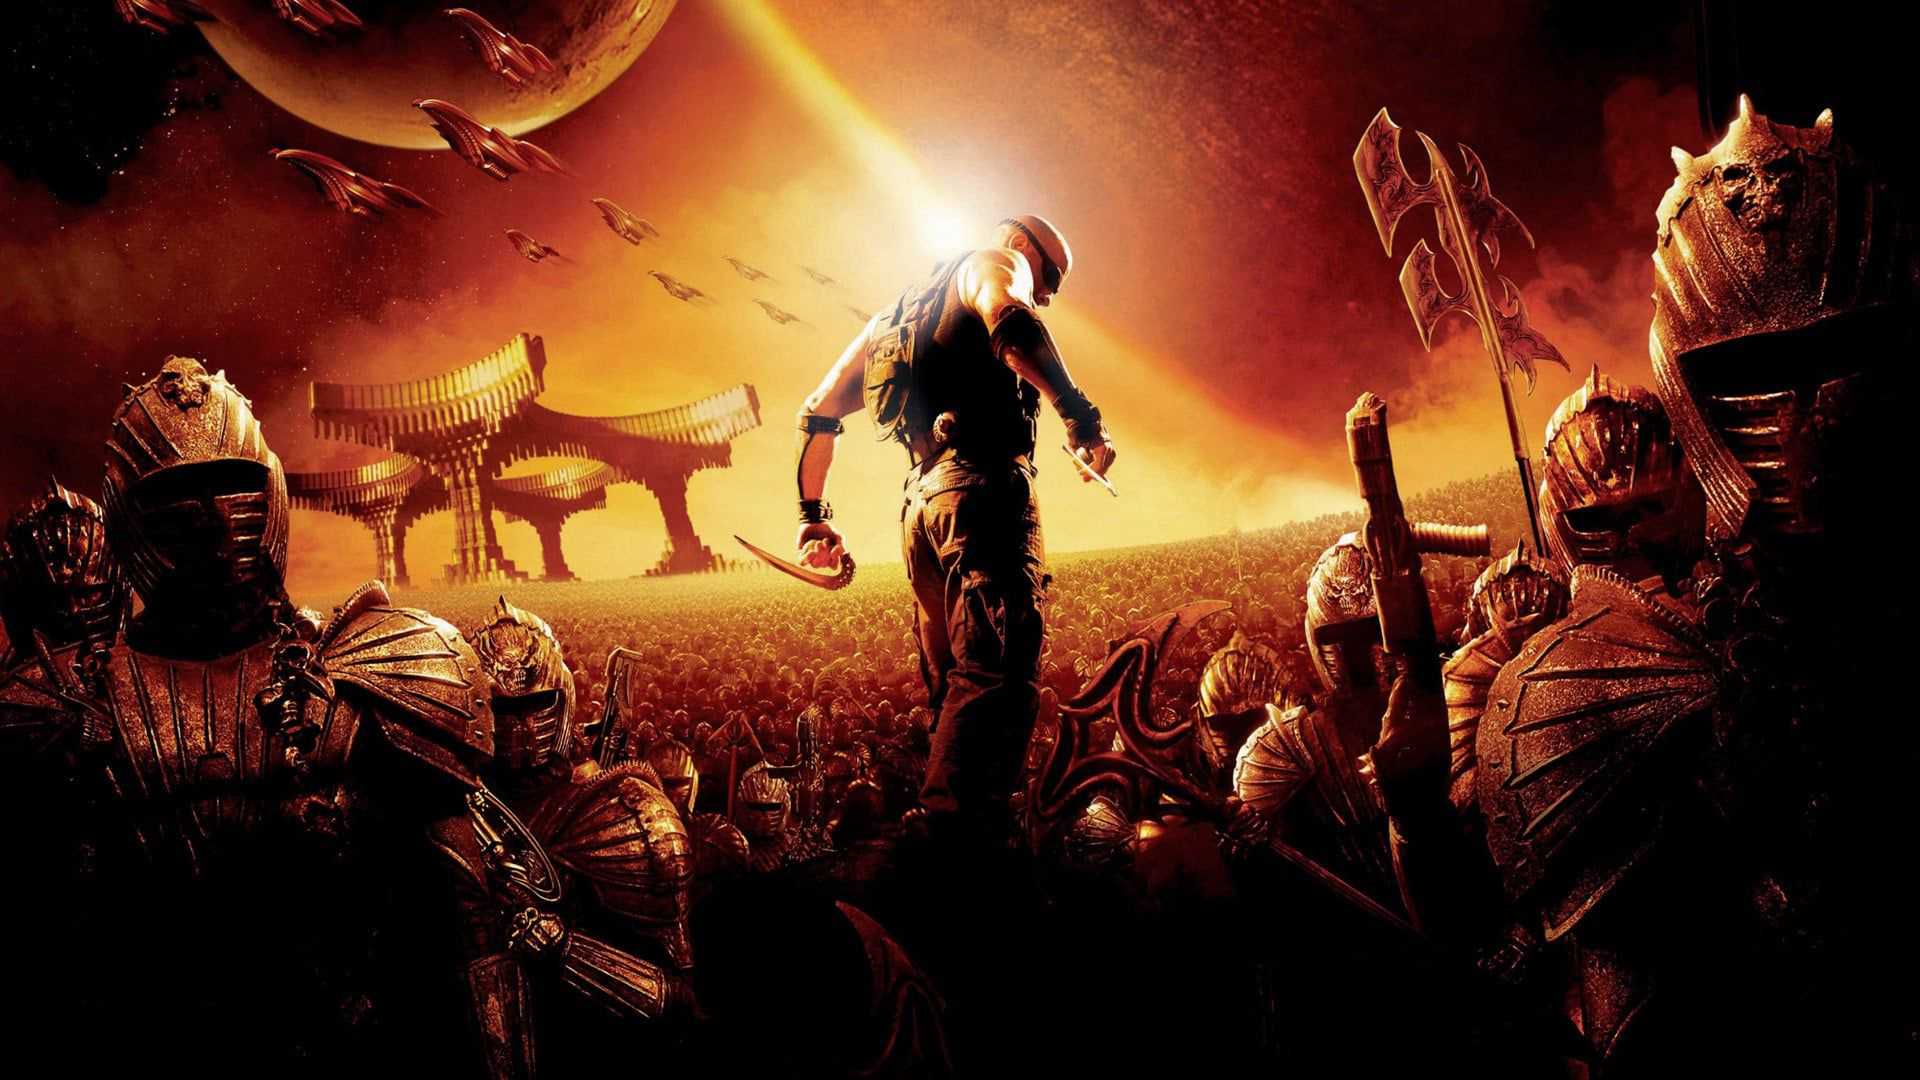 Huyền Thoại Riddick - The Chronicles of Riddick